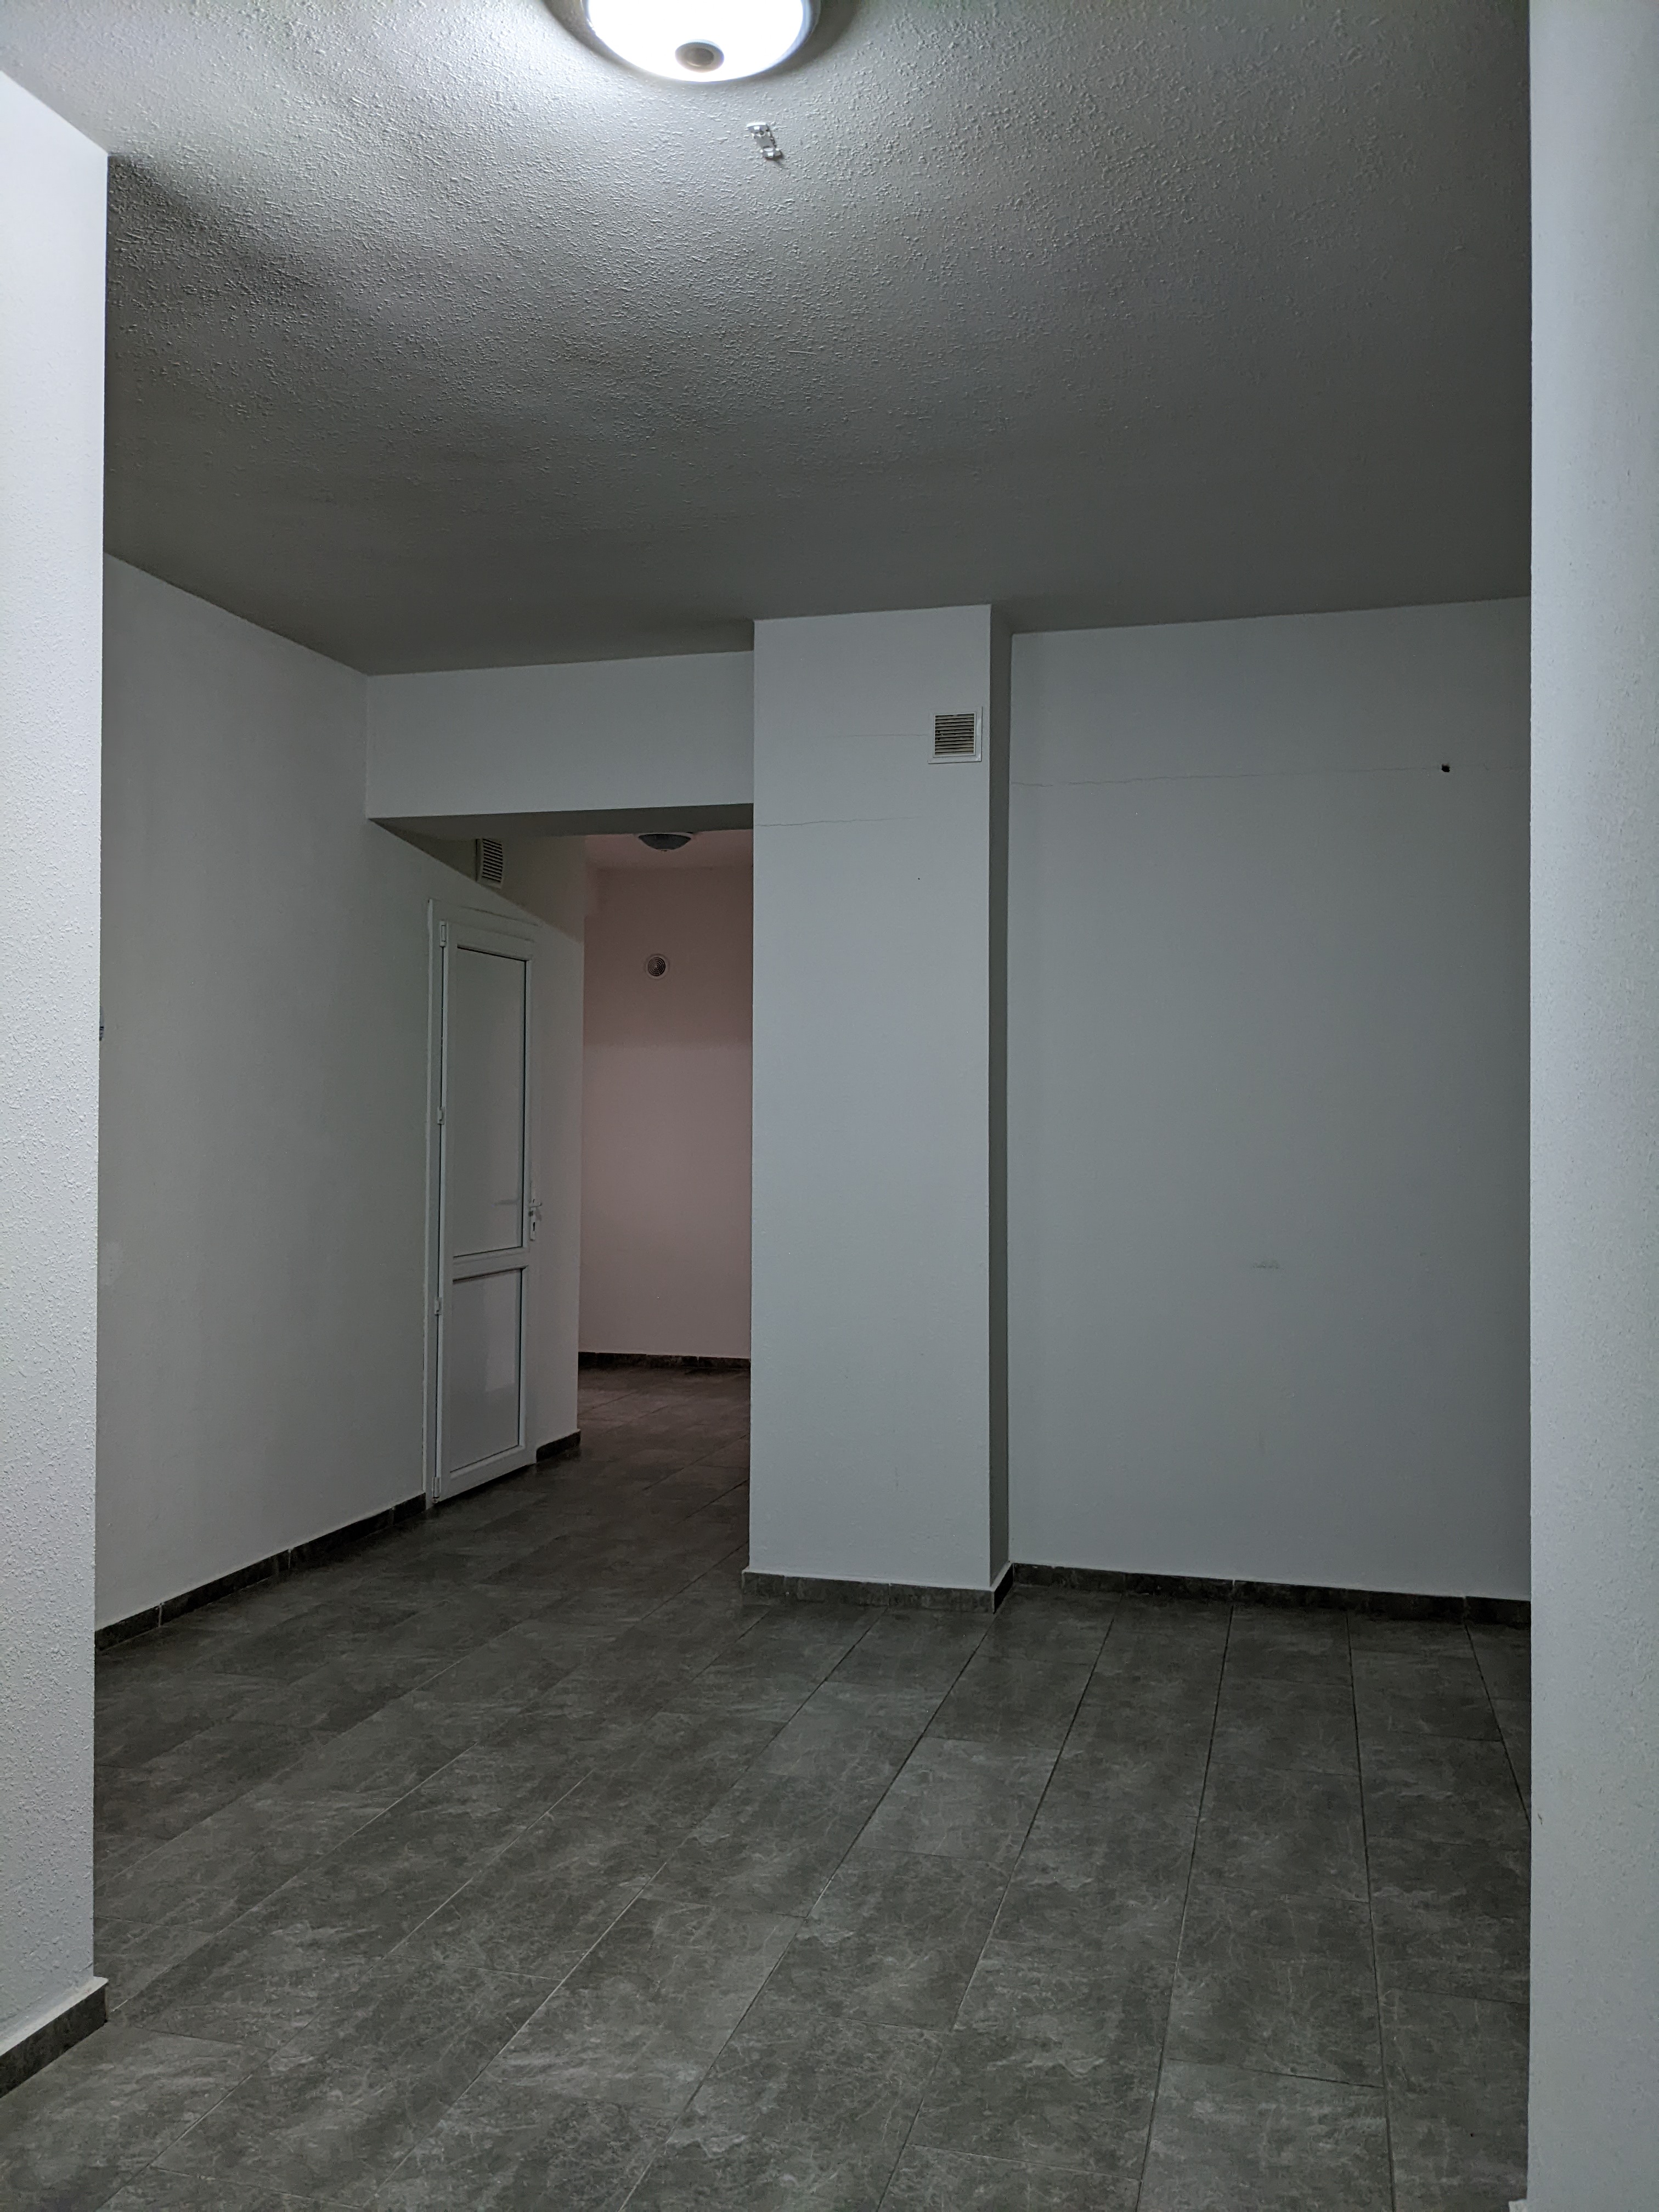 VÂNDUT Apartament de vânzare, Chișinău, sec. Telecentru, 2 odăi cu living euro reparate, 64 m2, et.5